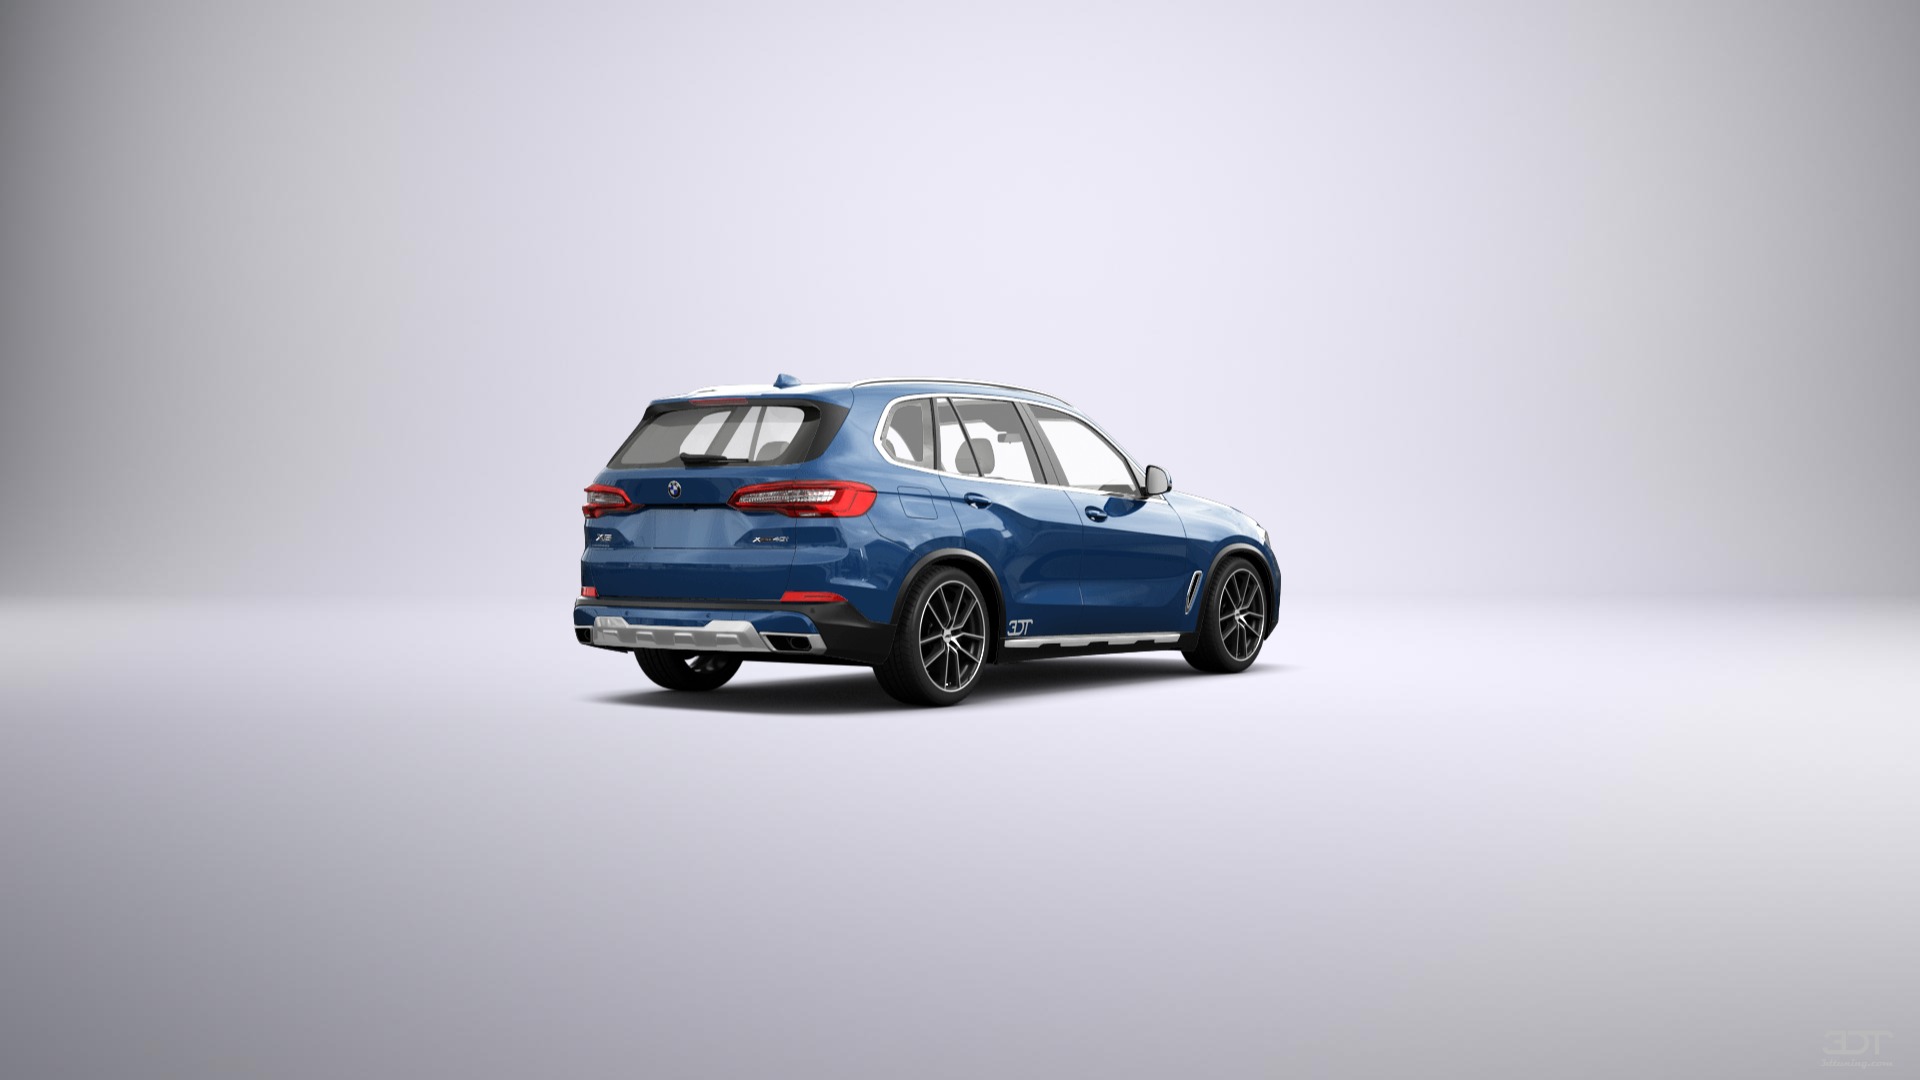 BMW X5 5 Door SUV 2019 tuning